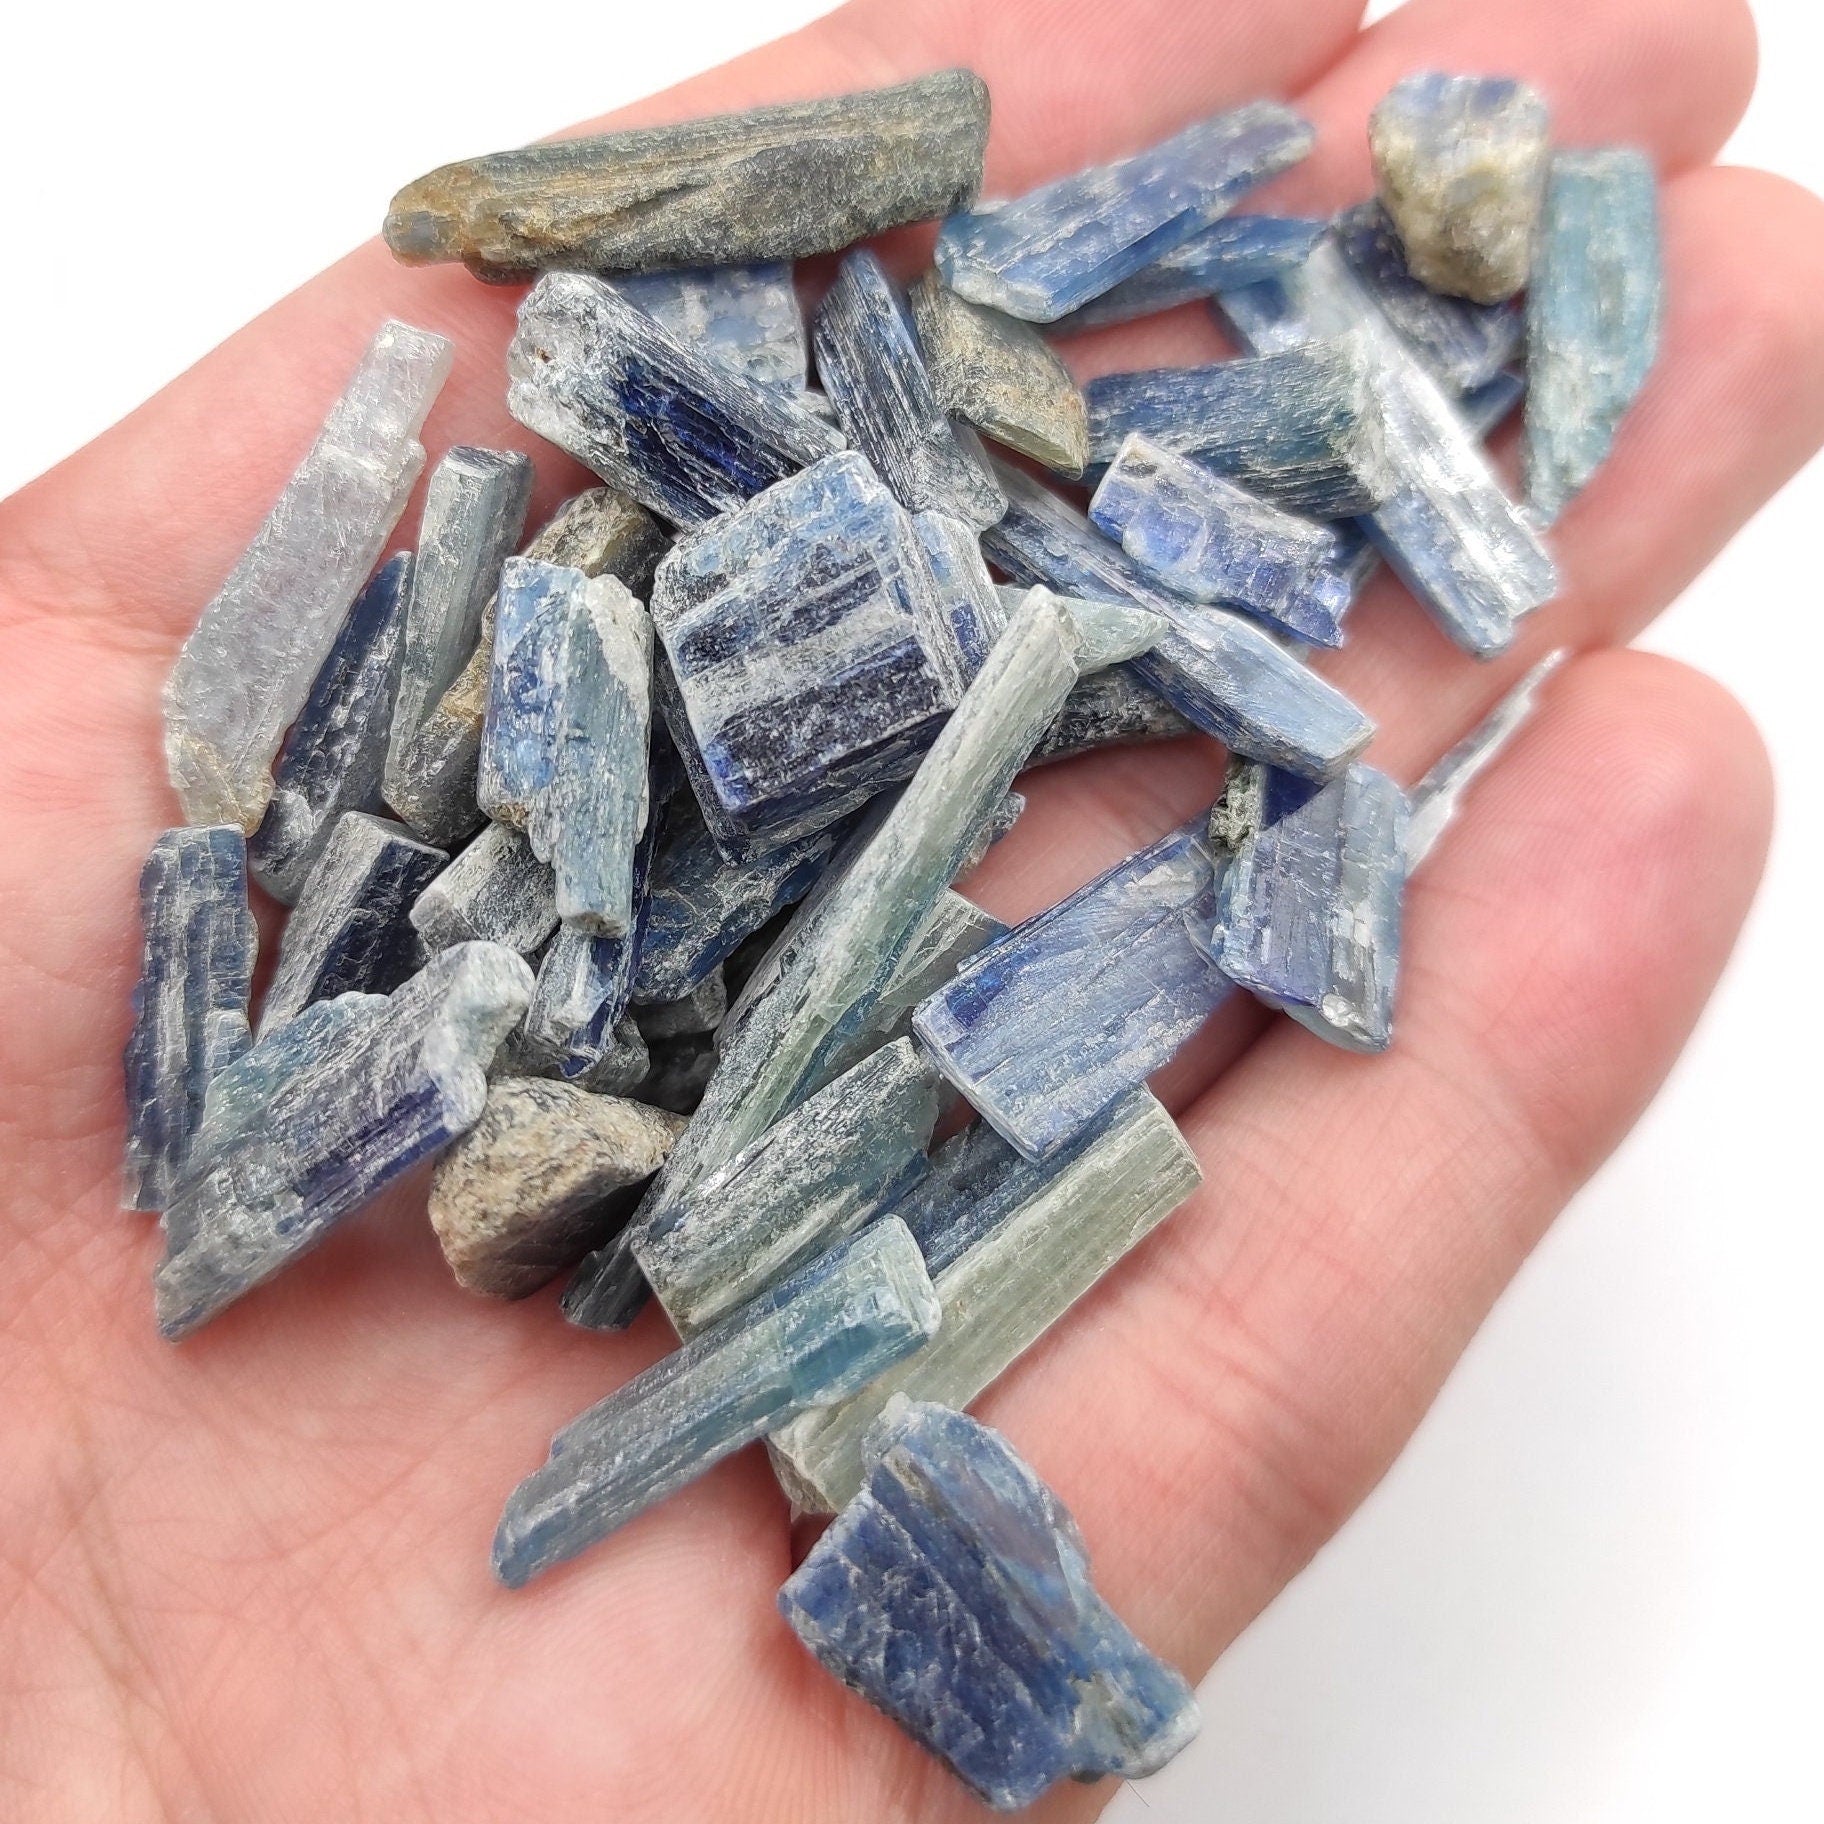 46g Lot of Kyanite - Raw Blue Kyanite - Small Kyanite Crystals - Rough Kyanite from India - Natural Kyanite Gemstones for Jewelry